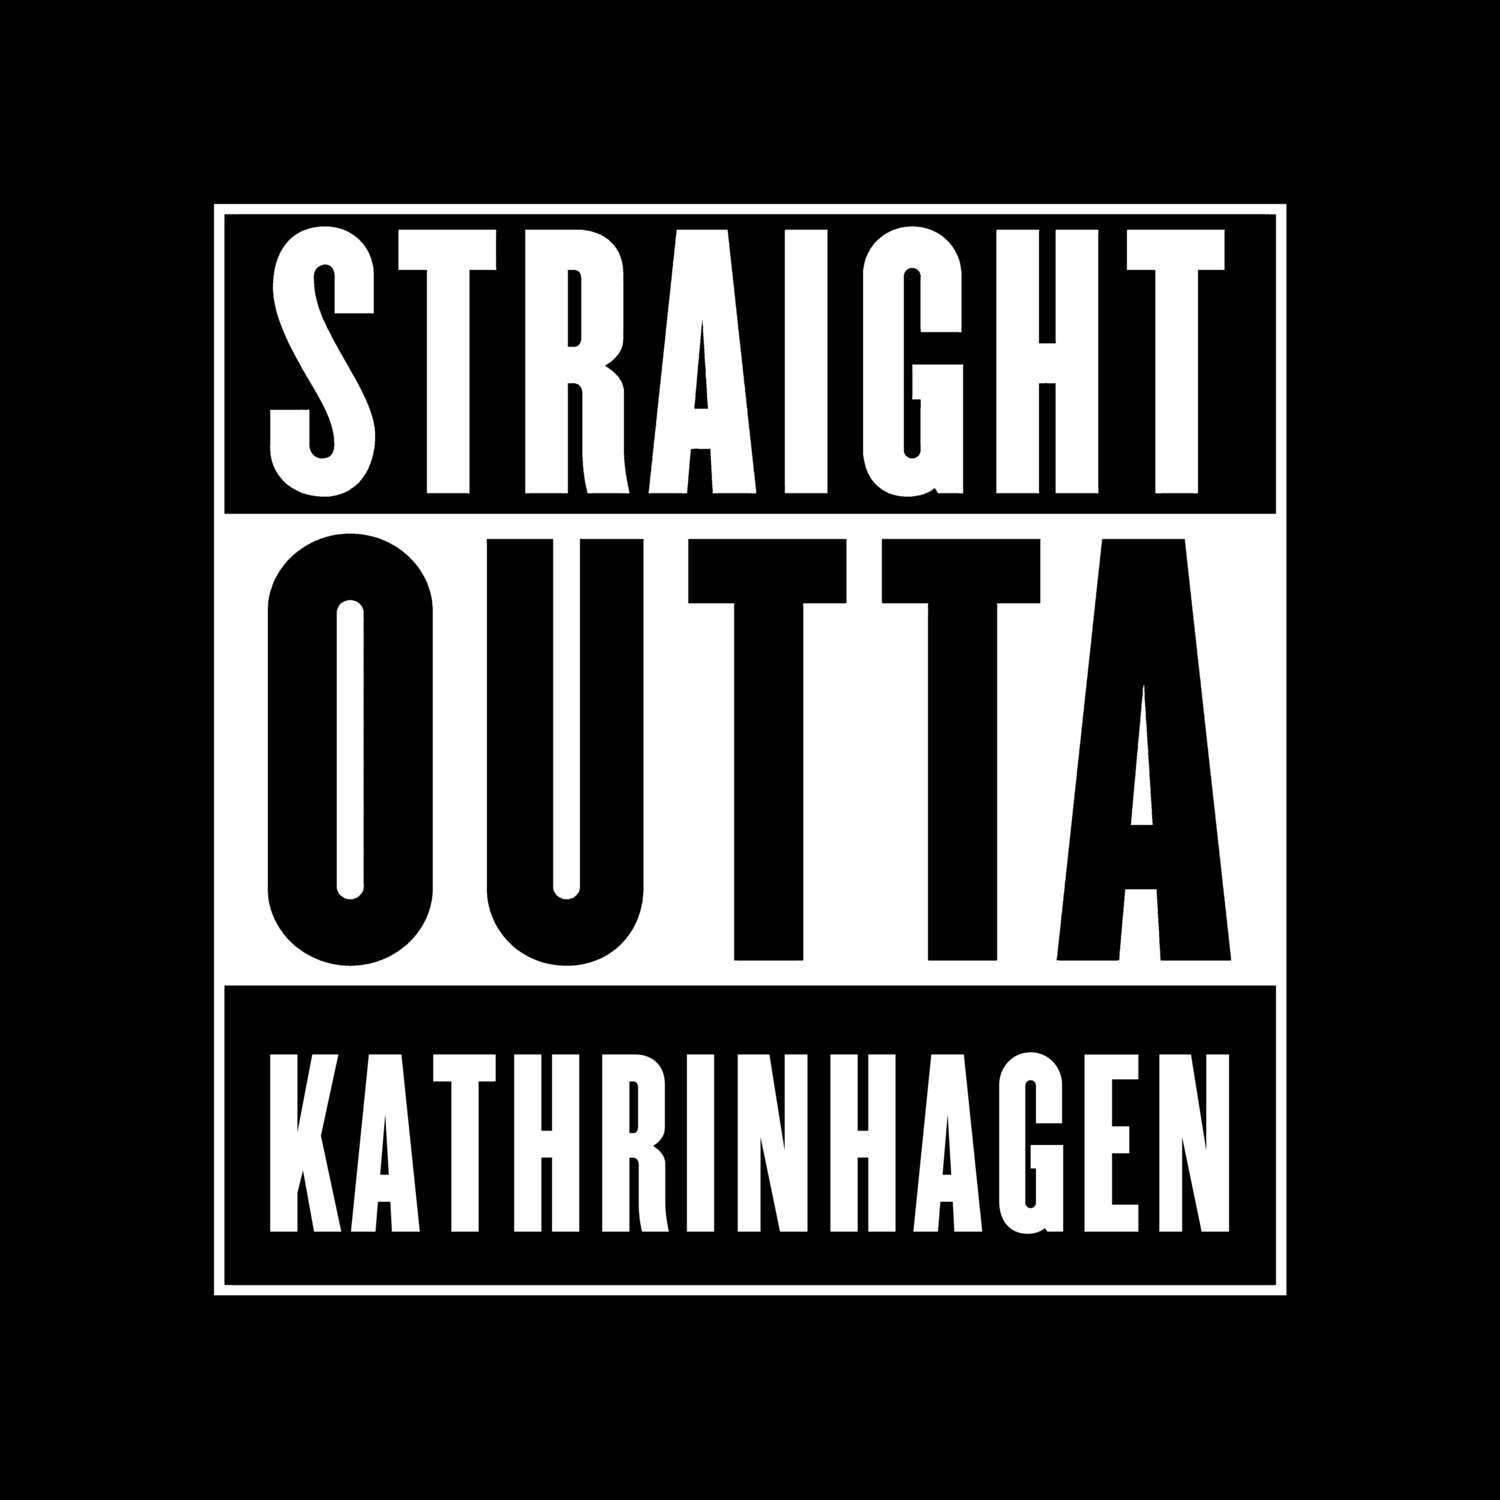 Kathrinhagen T-Shirt »Straight Outta«